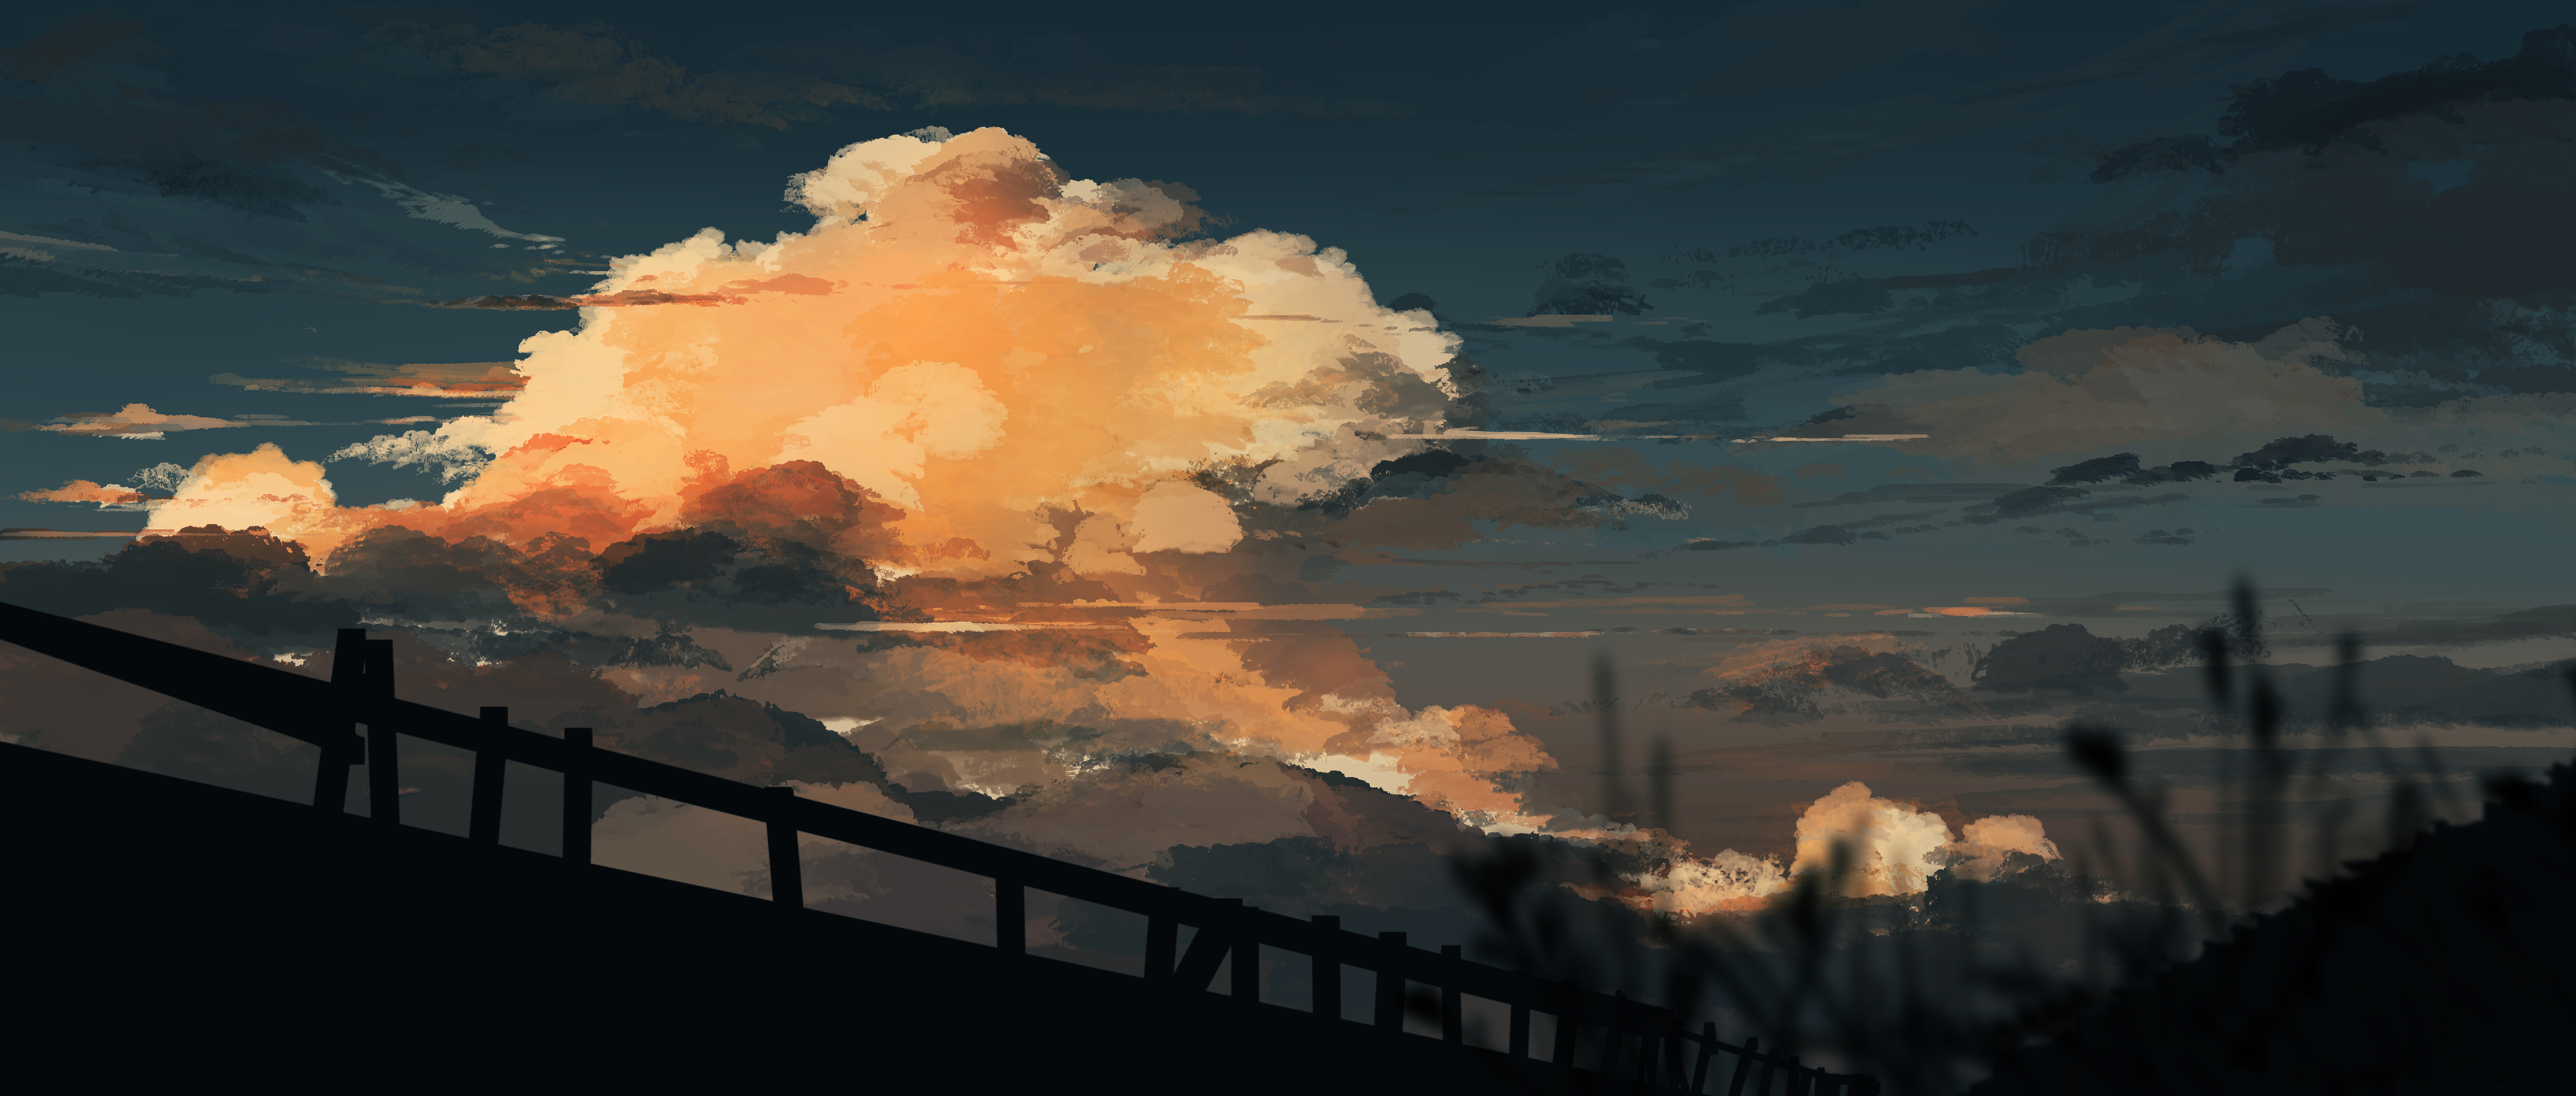 Gracile Digital Art Artwork Illustration Sky Clouds Sunlight Sunset Sunset Glow 5640x2400